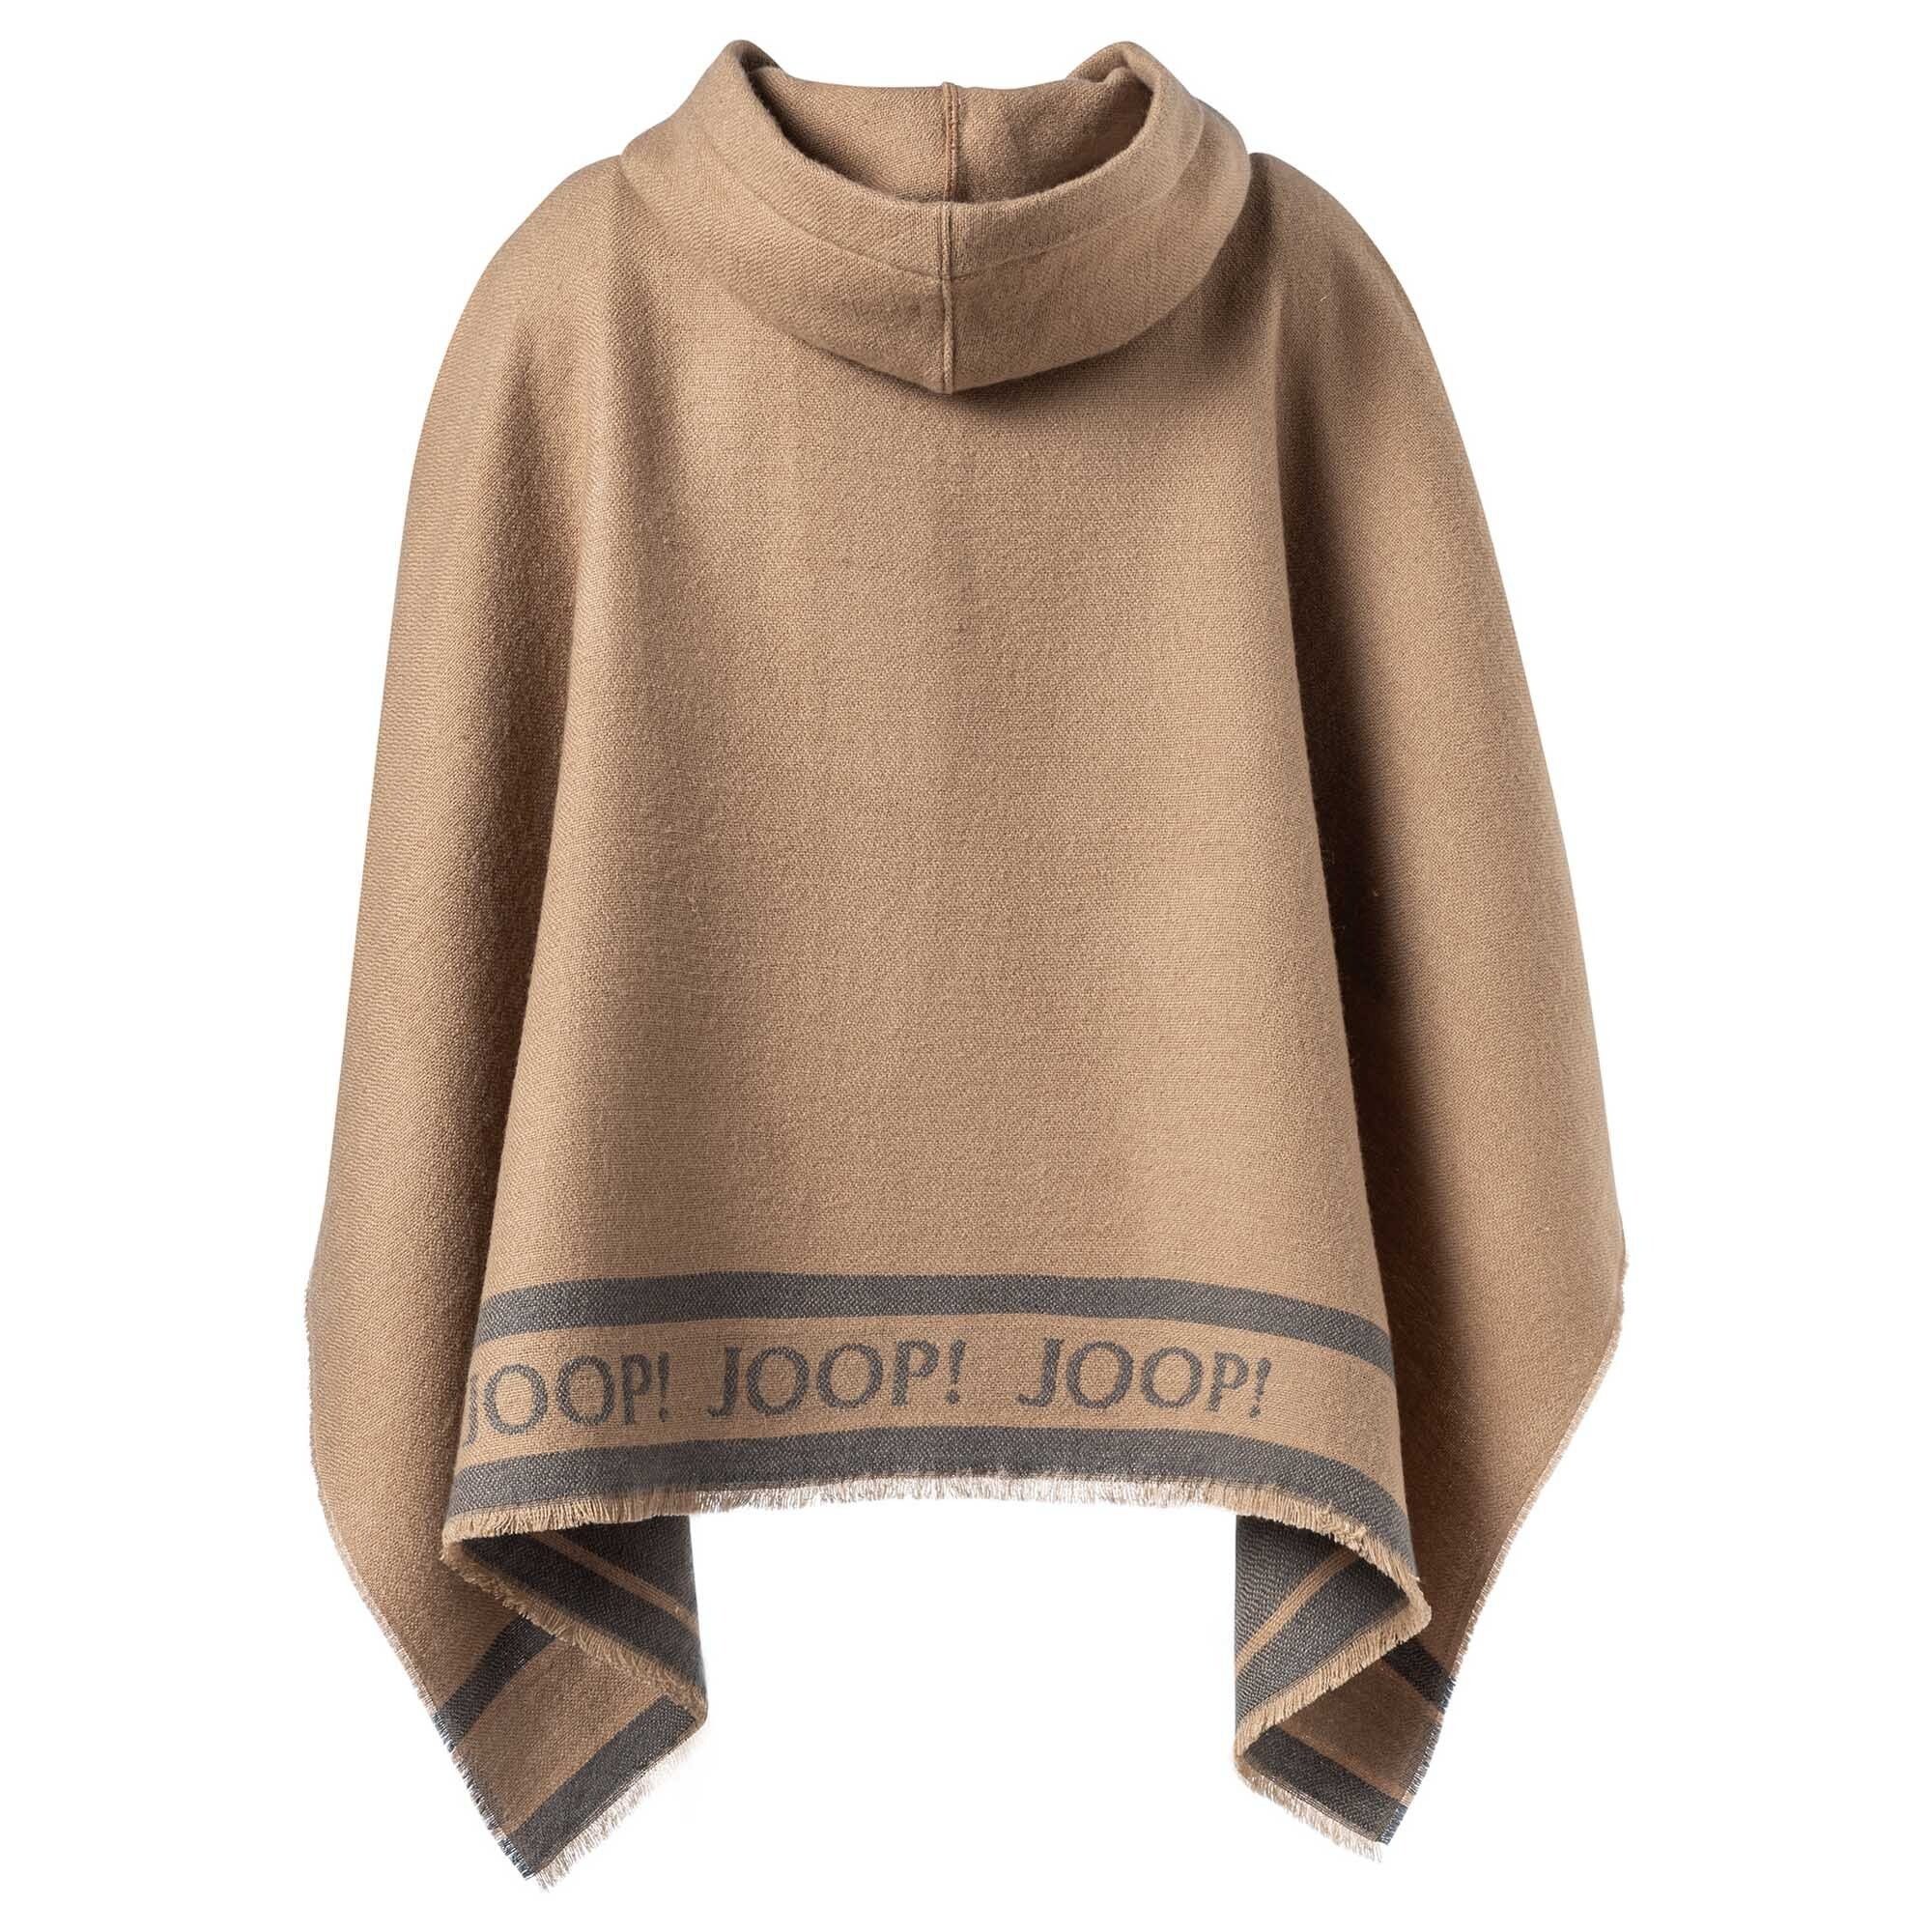 Joop! Sweater Damen Logo, - One Beige Poncho Fransen, Kapuze, gewebt